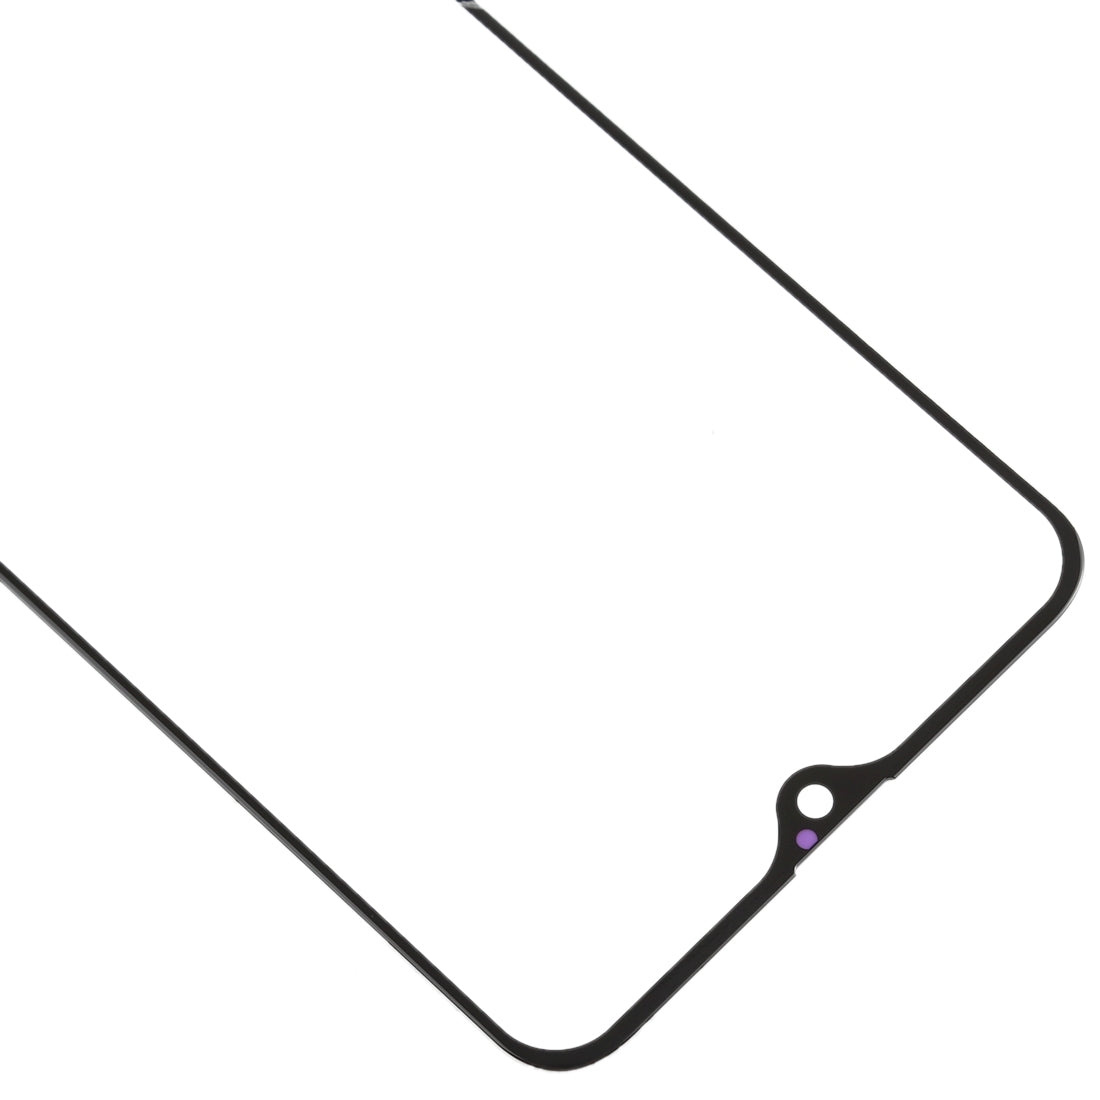 Cristal Pantalla Frontal + Adhesivo OCA Xiaomi Redmi Note 8